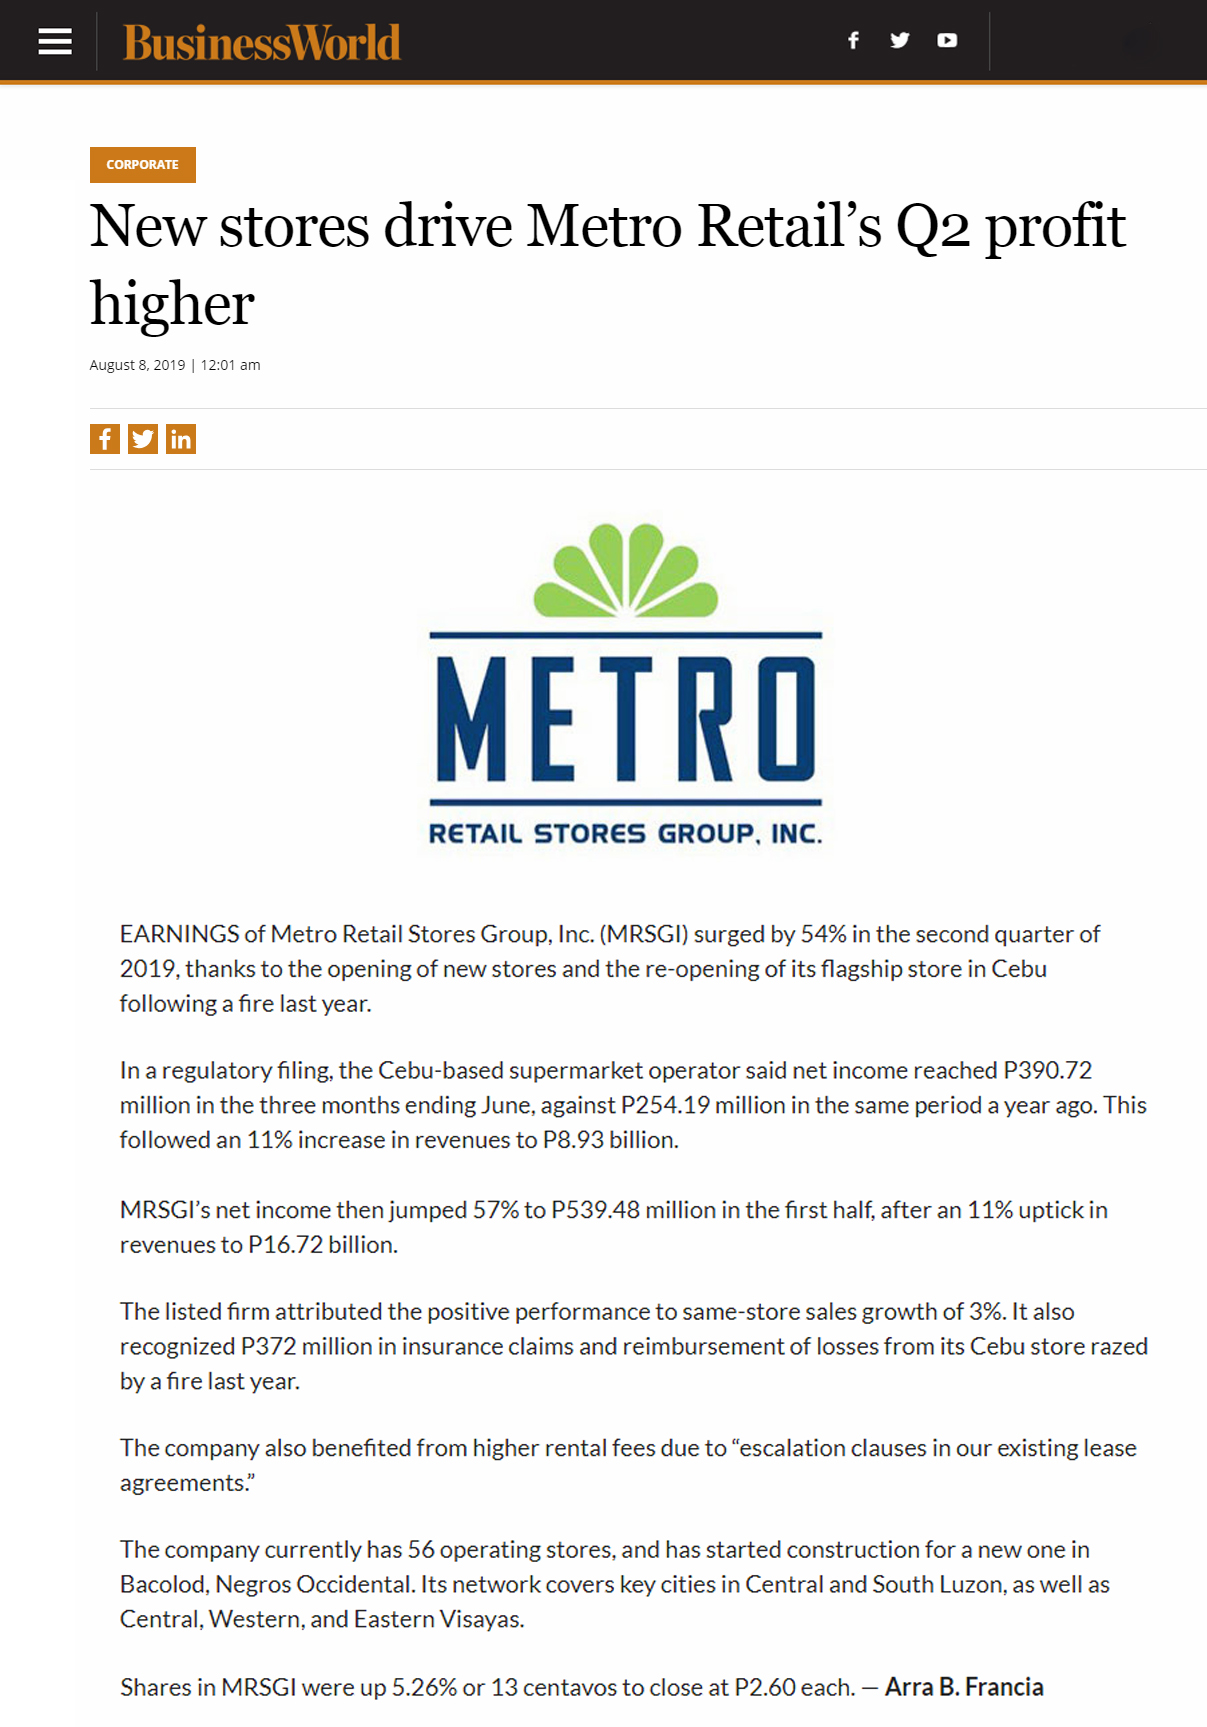 August 8 2019 New stores drive Metro Retails Q2 profit higher Business World www.bworldonline.com